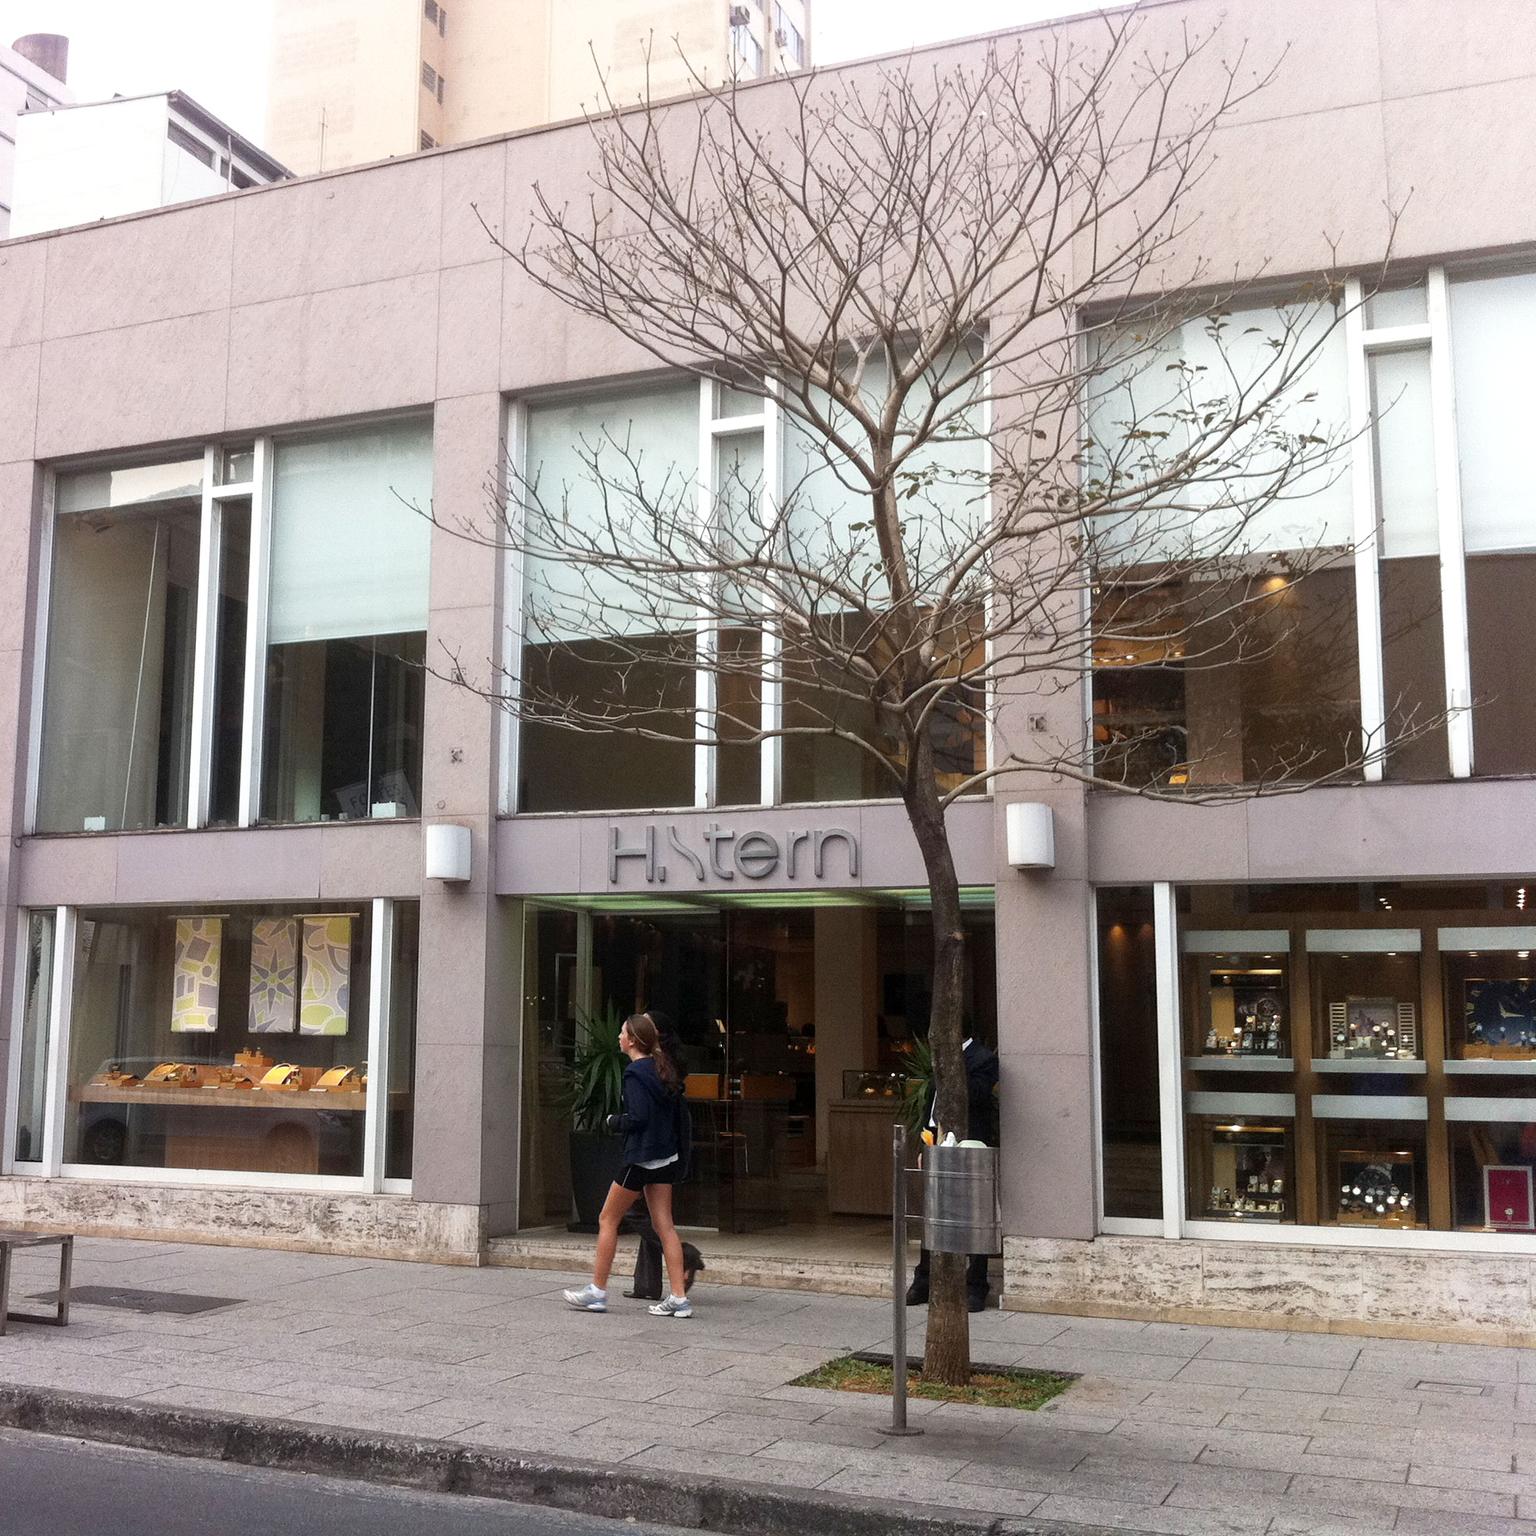 H.Stern boutique exterior